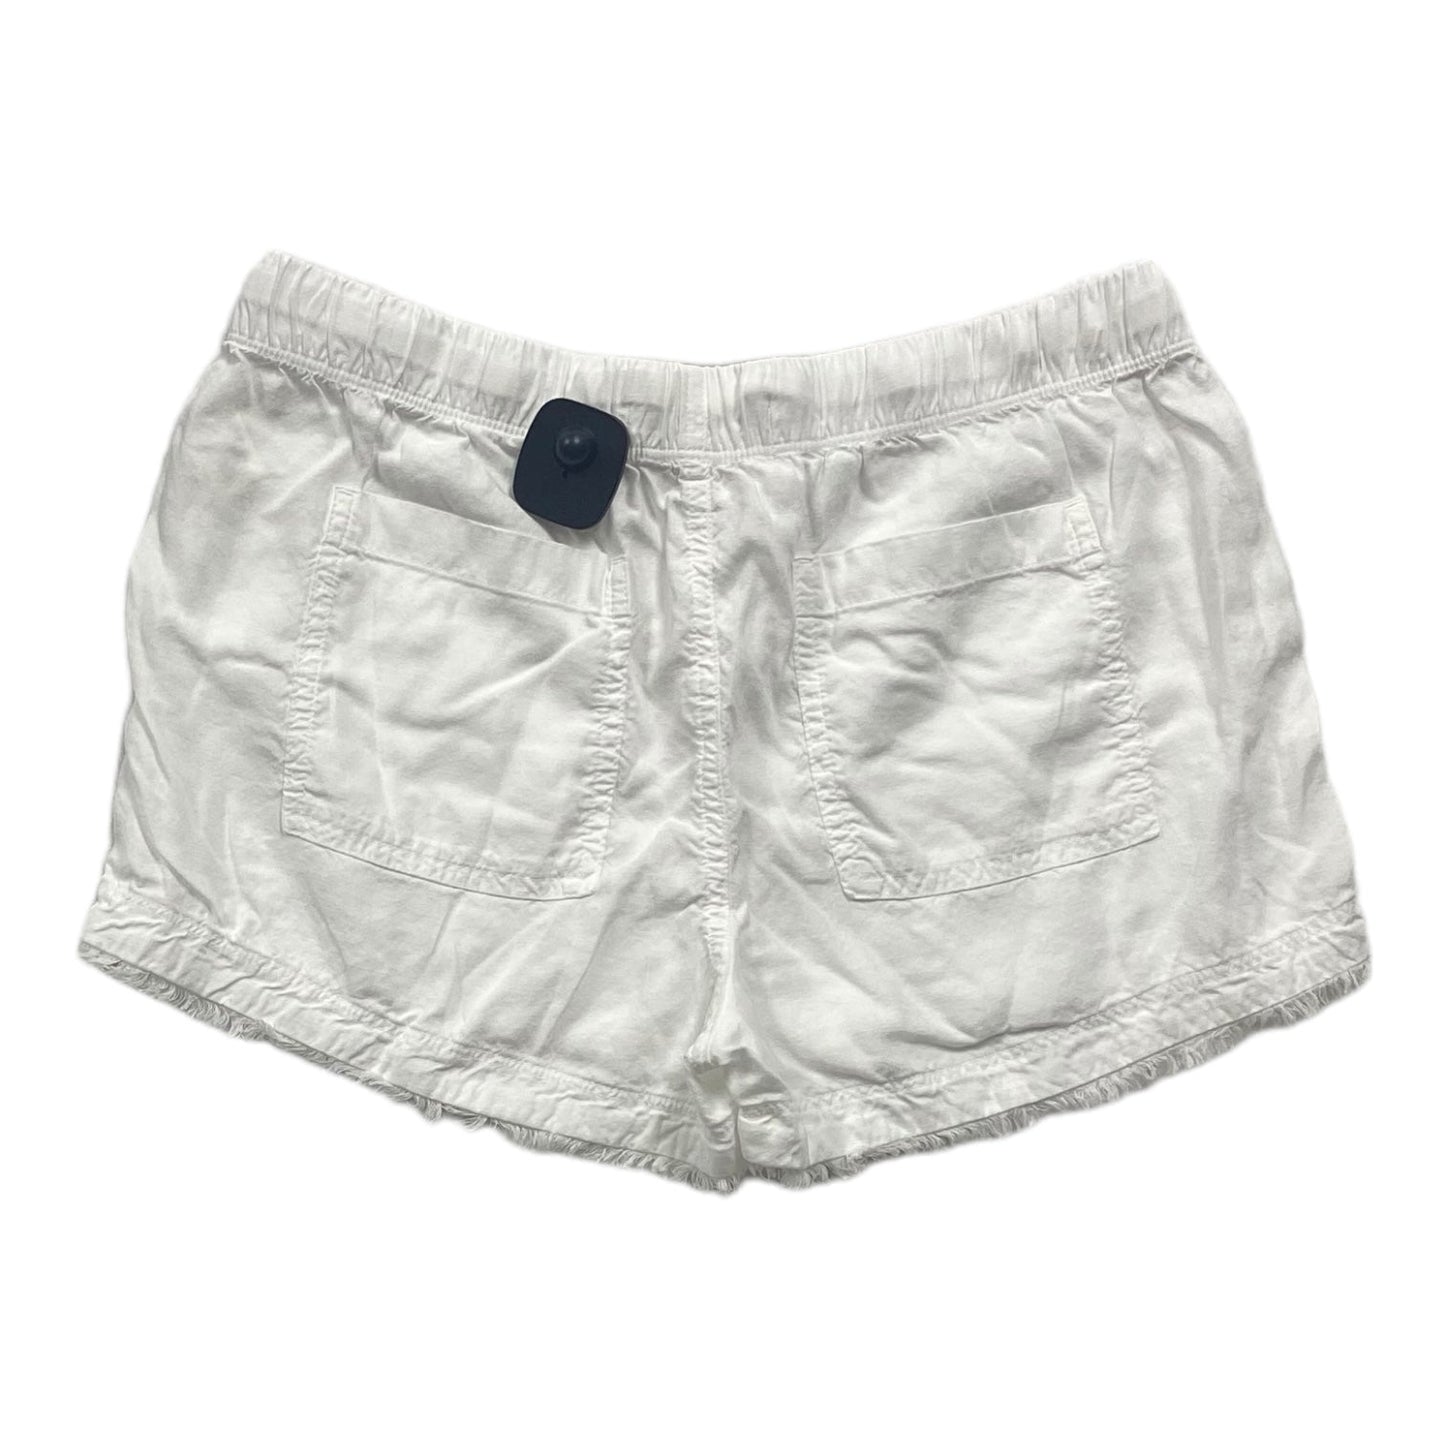 White Shorts Cloth & Stone, Size S